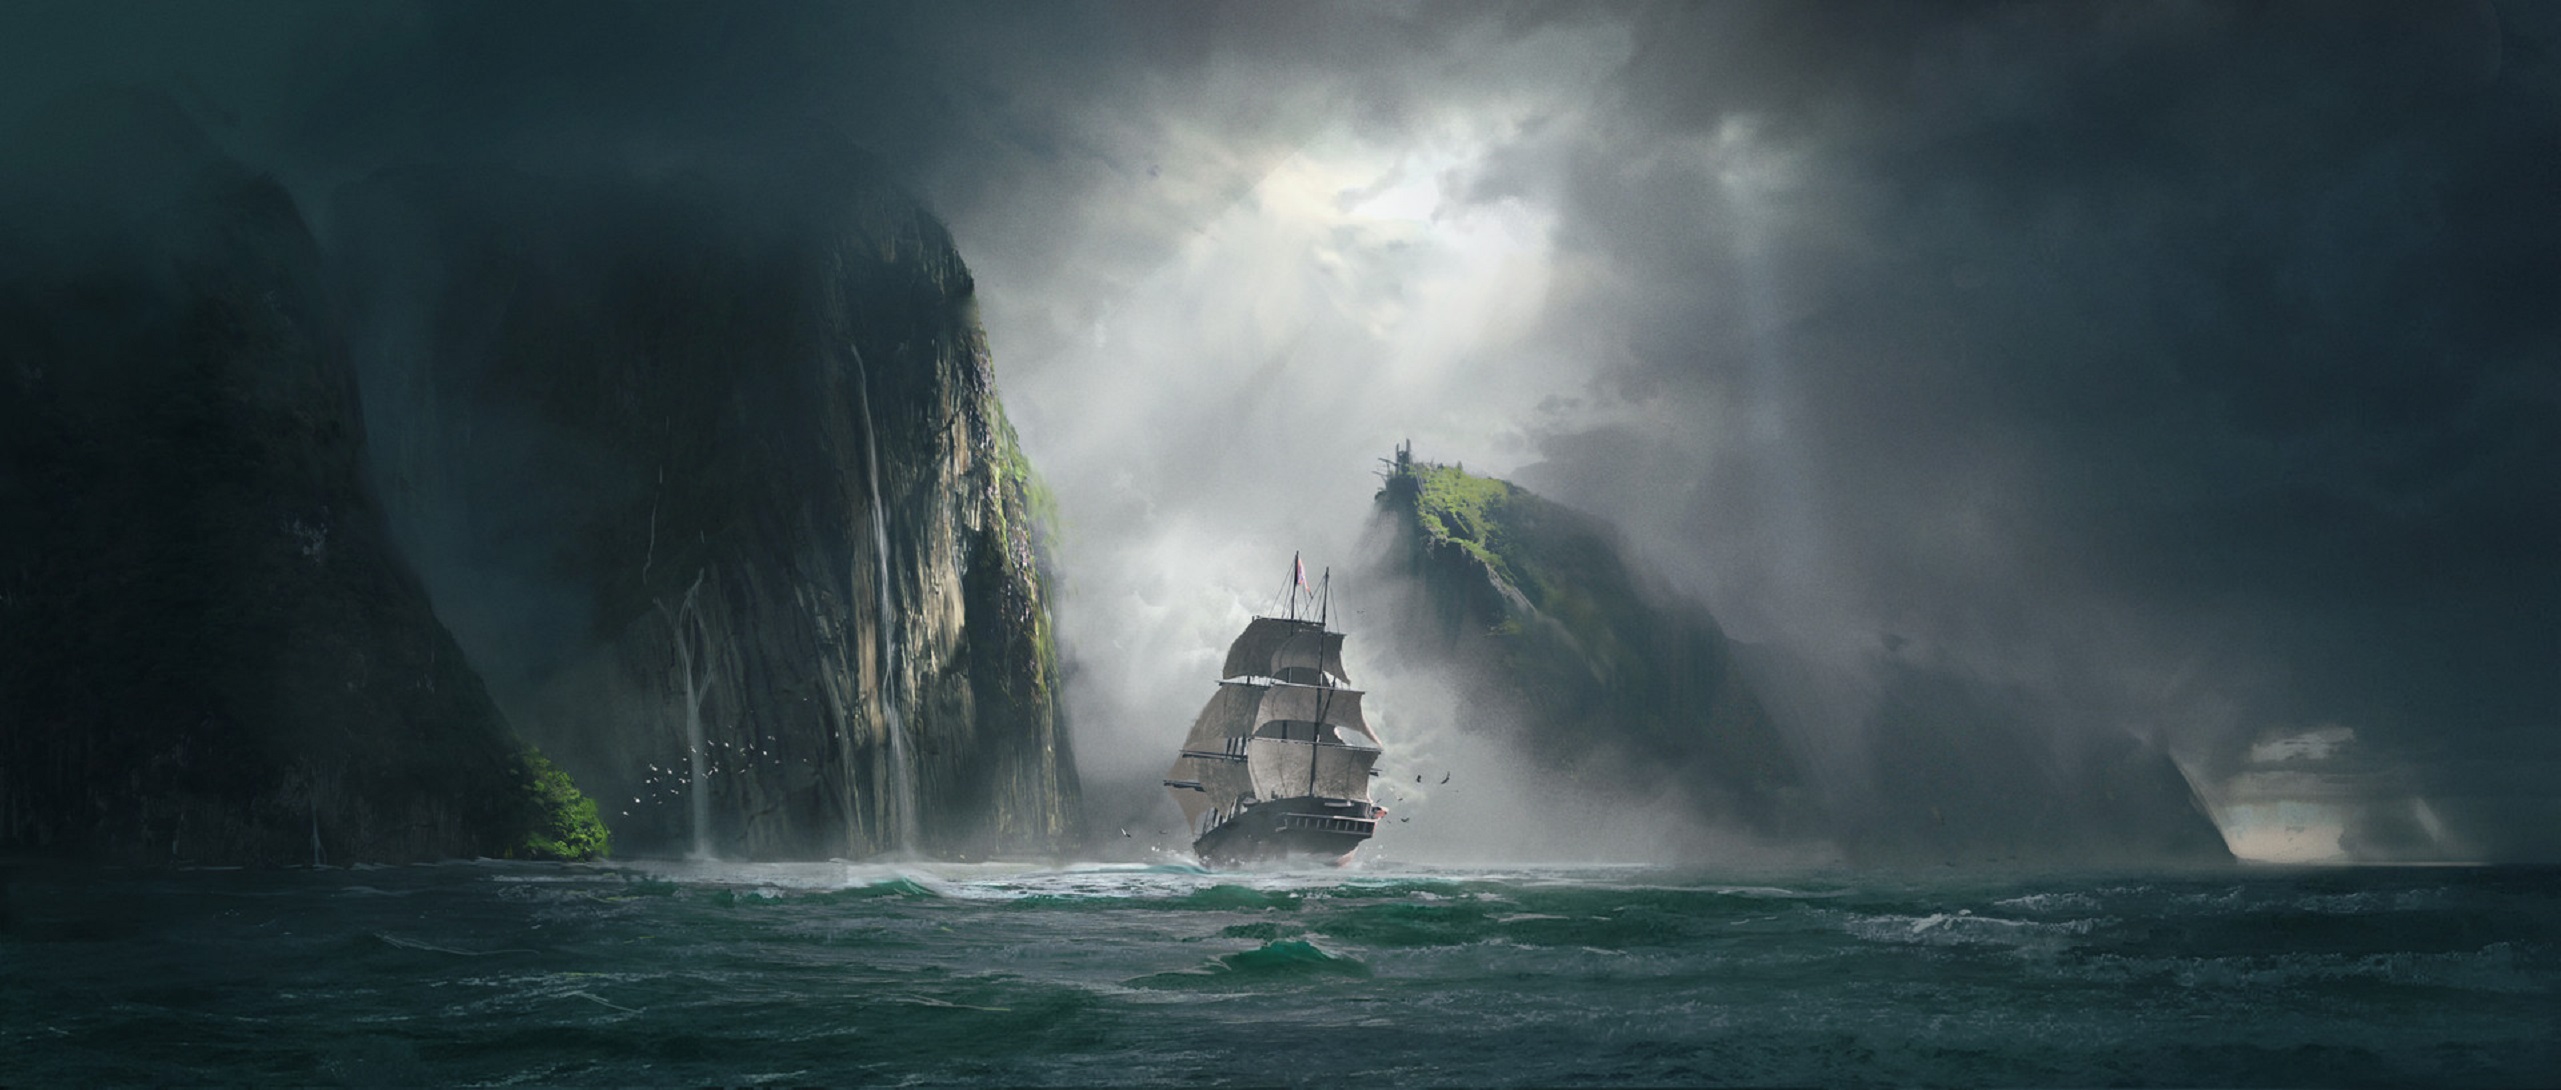 Sailing Ship on Stormy Sea